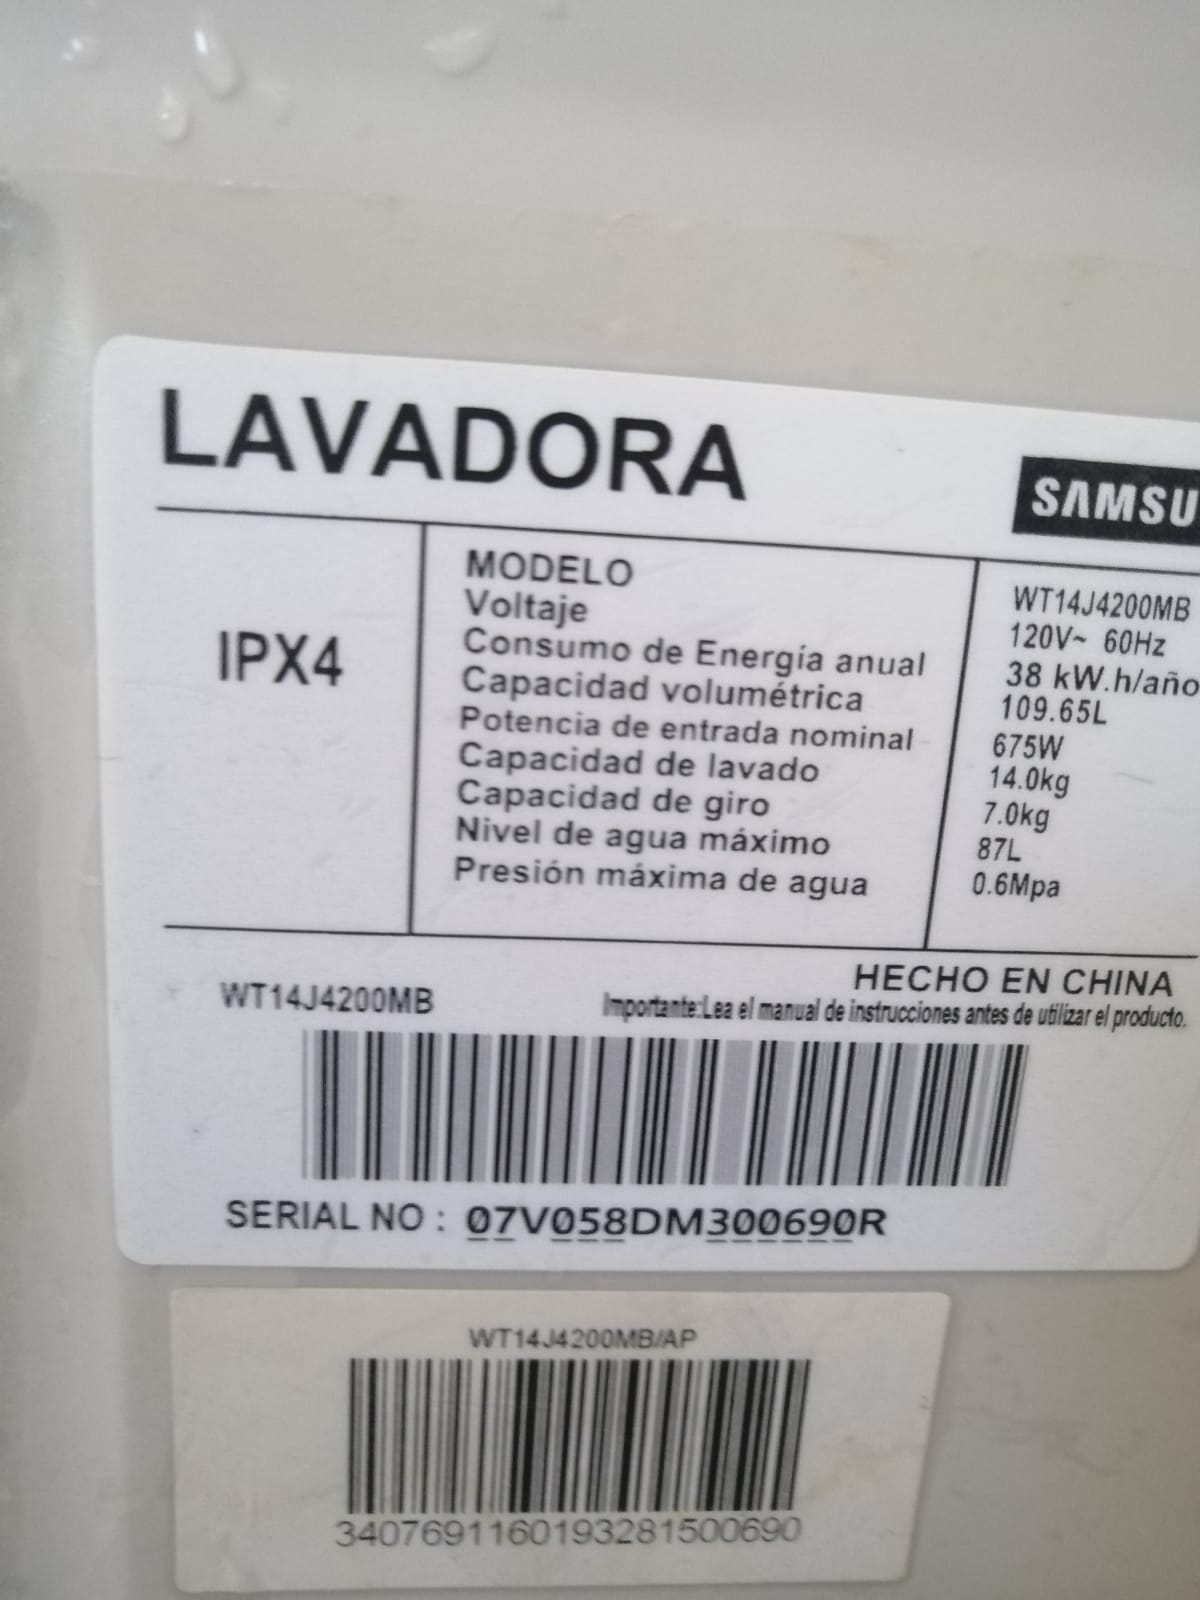 Lavadora Semiautomática Samsung WT14J4200MB de 14 Kg Blanca Foto 7220682-9.jpg